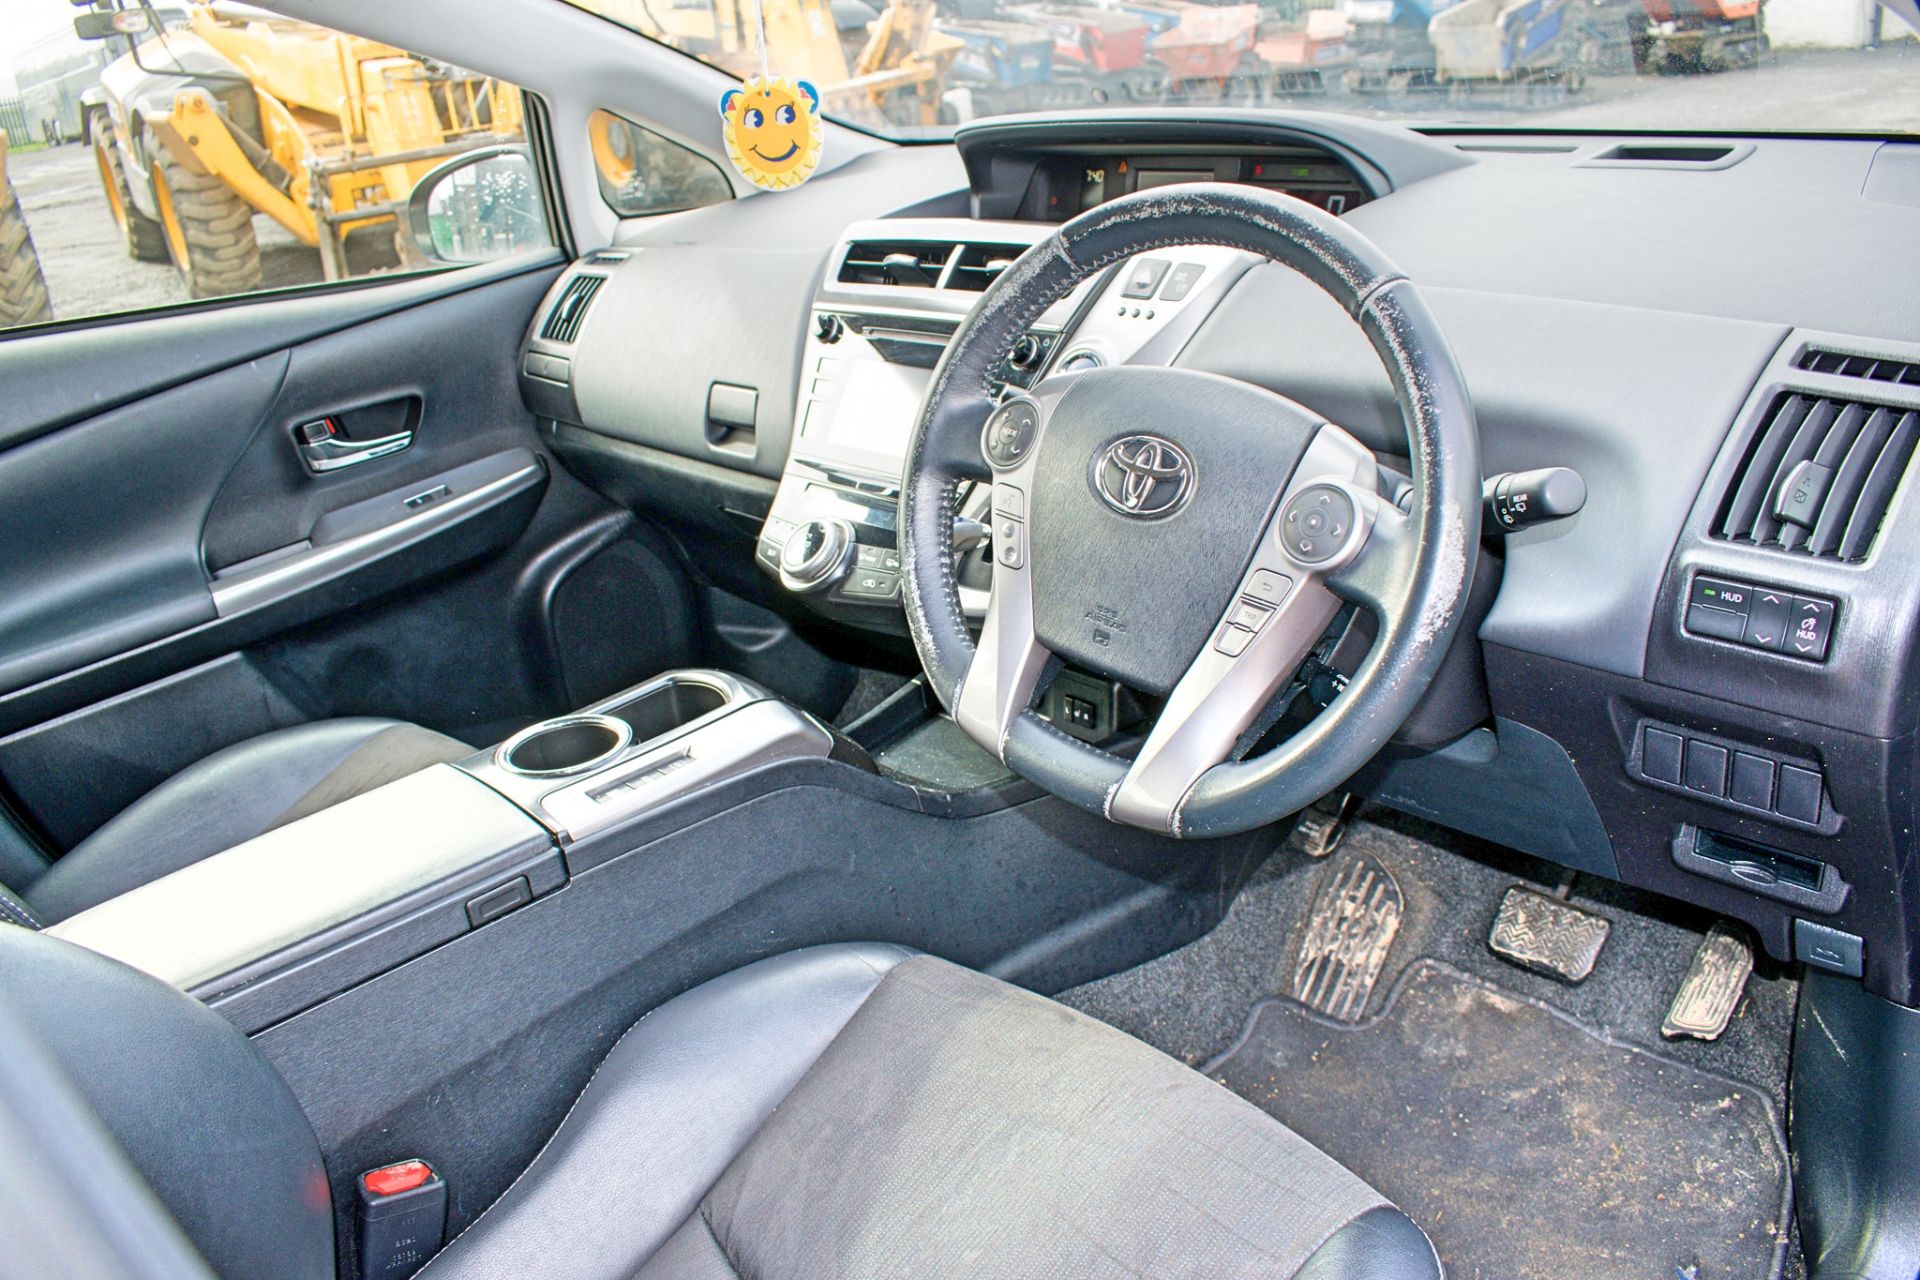 Toyota Prius Icon CVT Hybrid 5 door hatchback car Registration Number: LO66 BGF Date of - Bild 7 aus 13